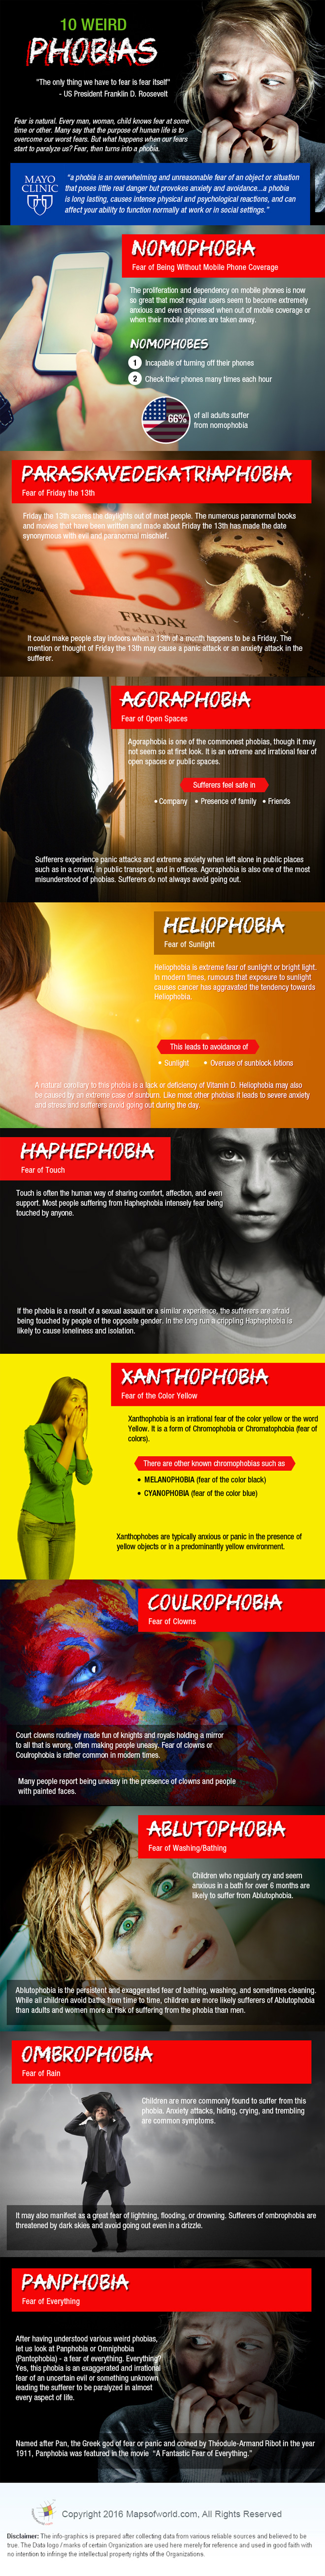 Infographic on top ten phobia